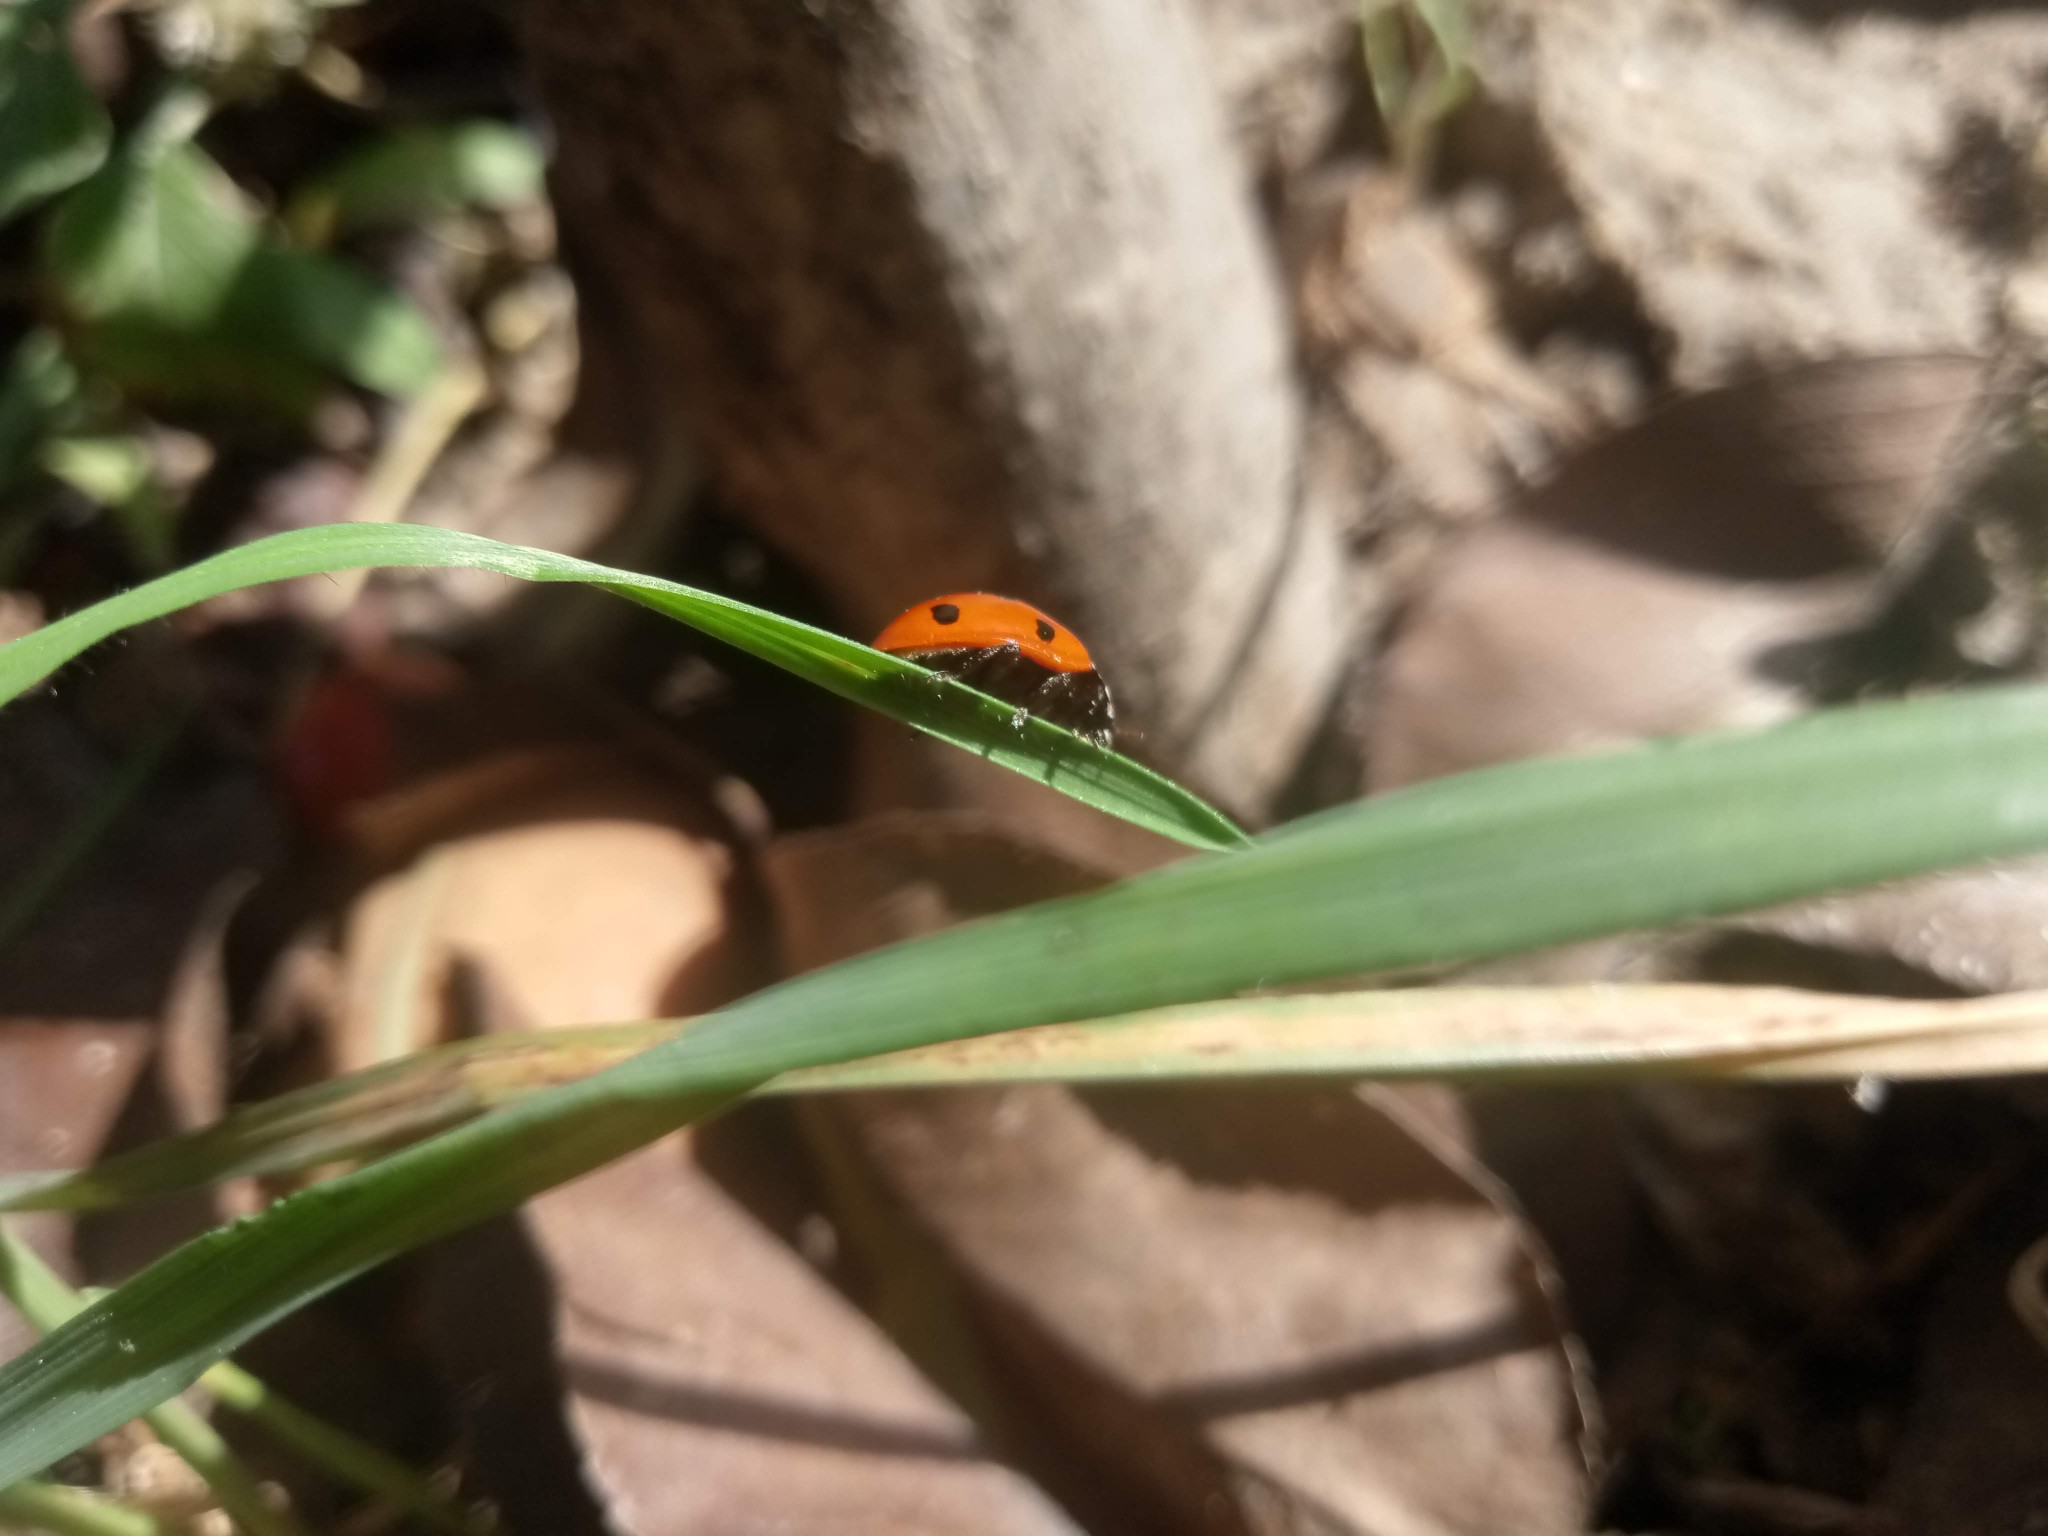 Ladybug on green grass 